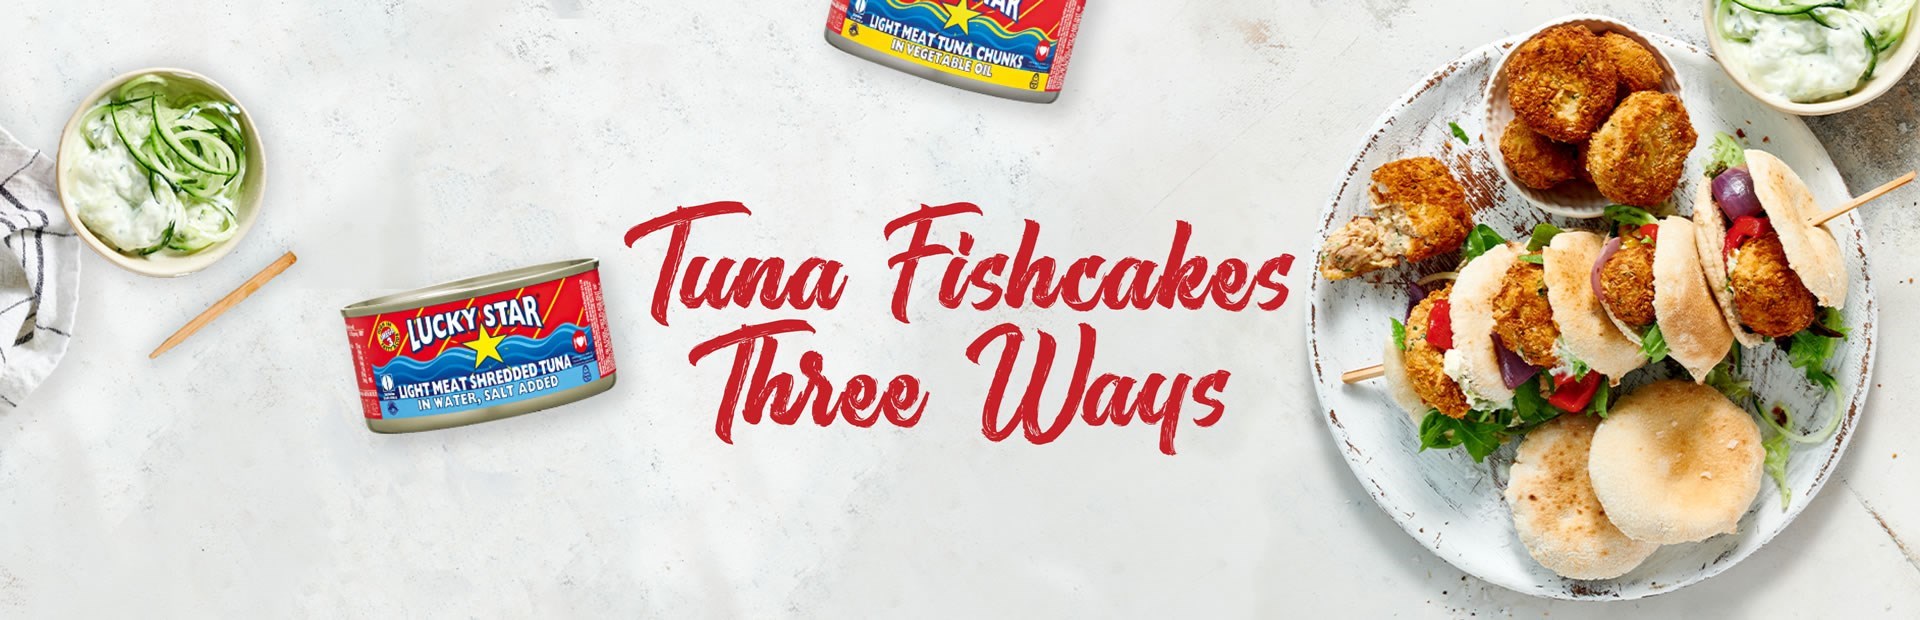 tuna fish cakes banner